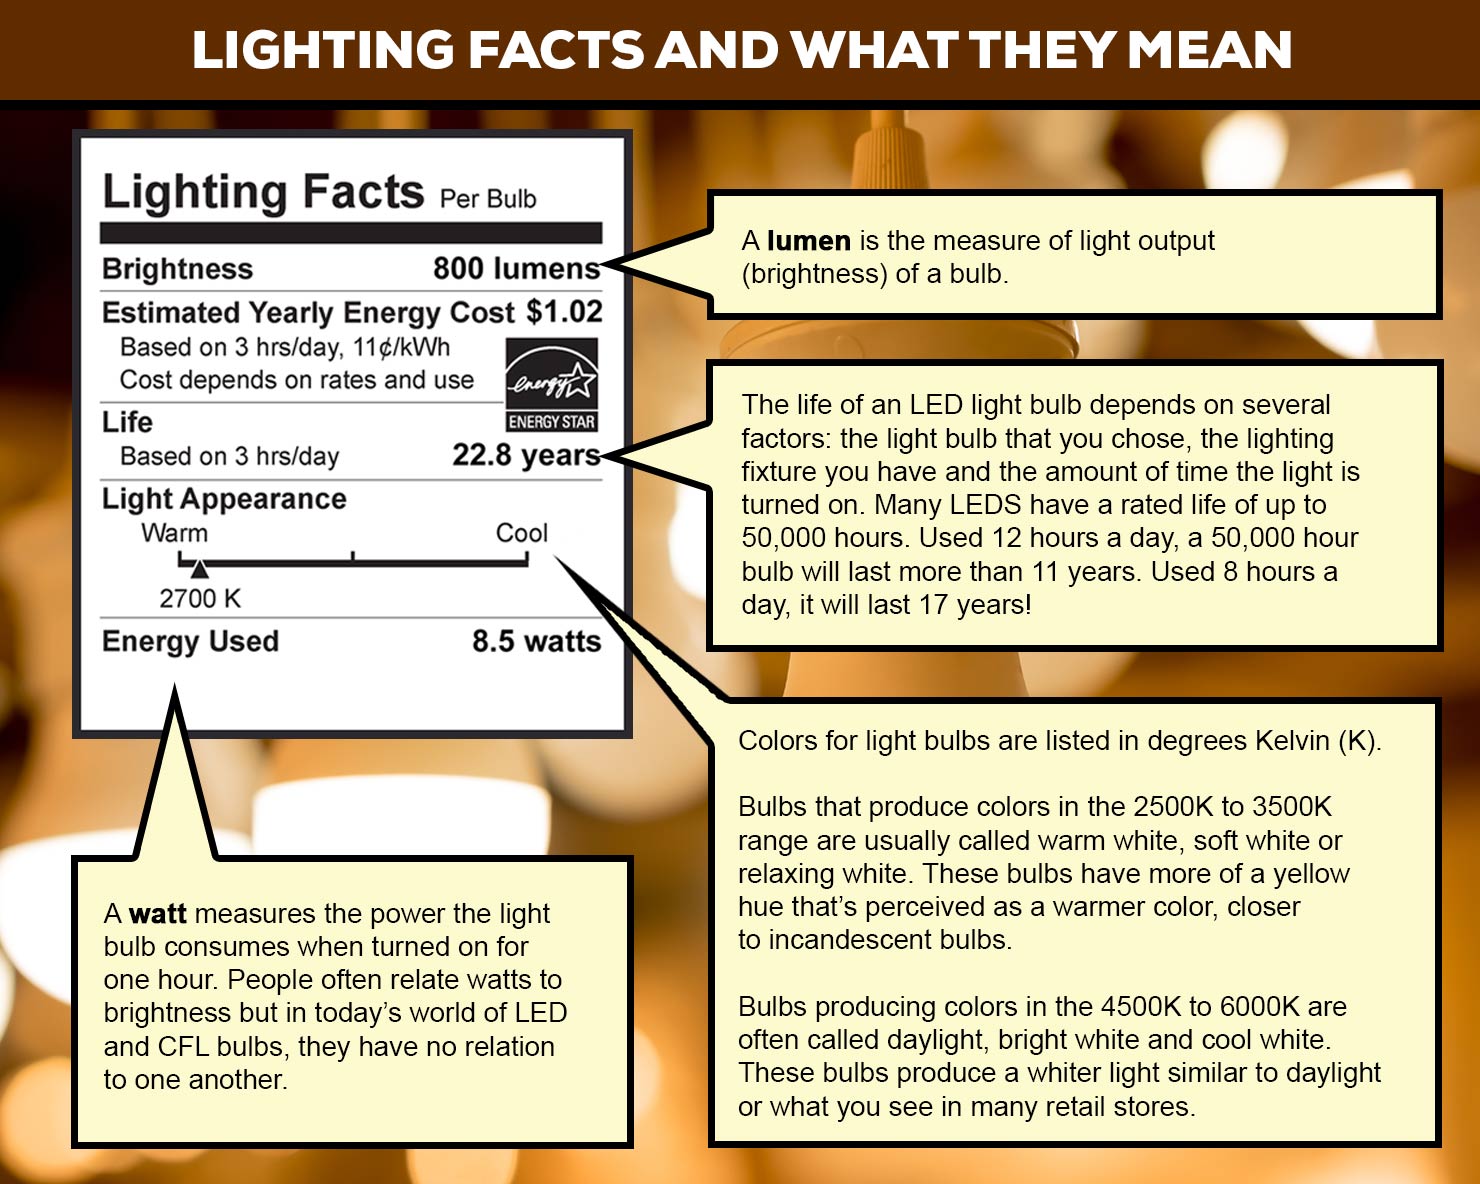 Lighting Facts Image